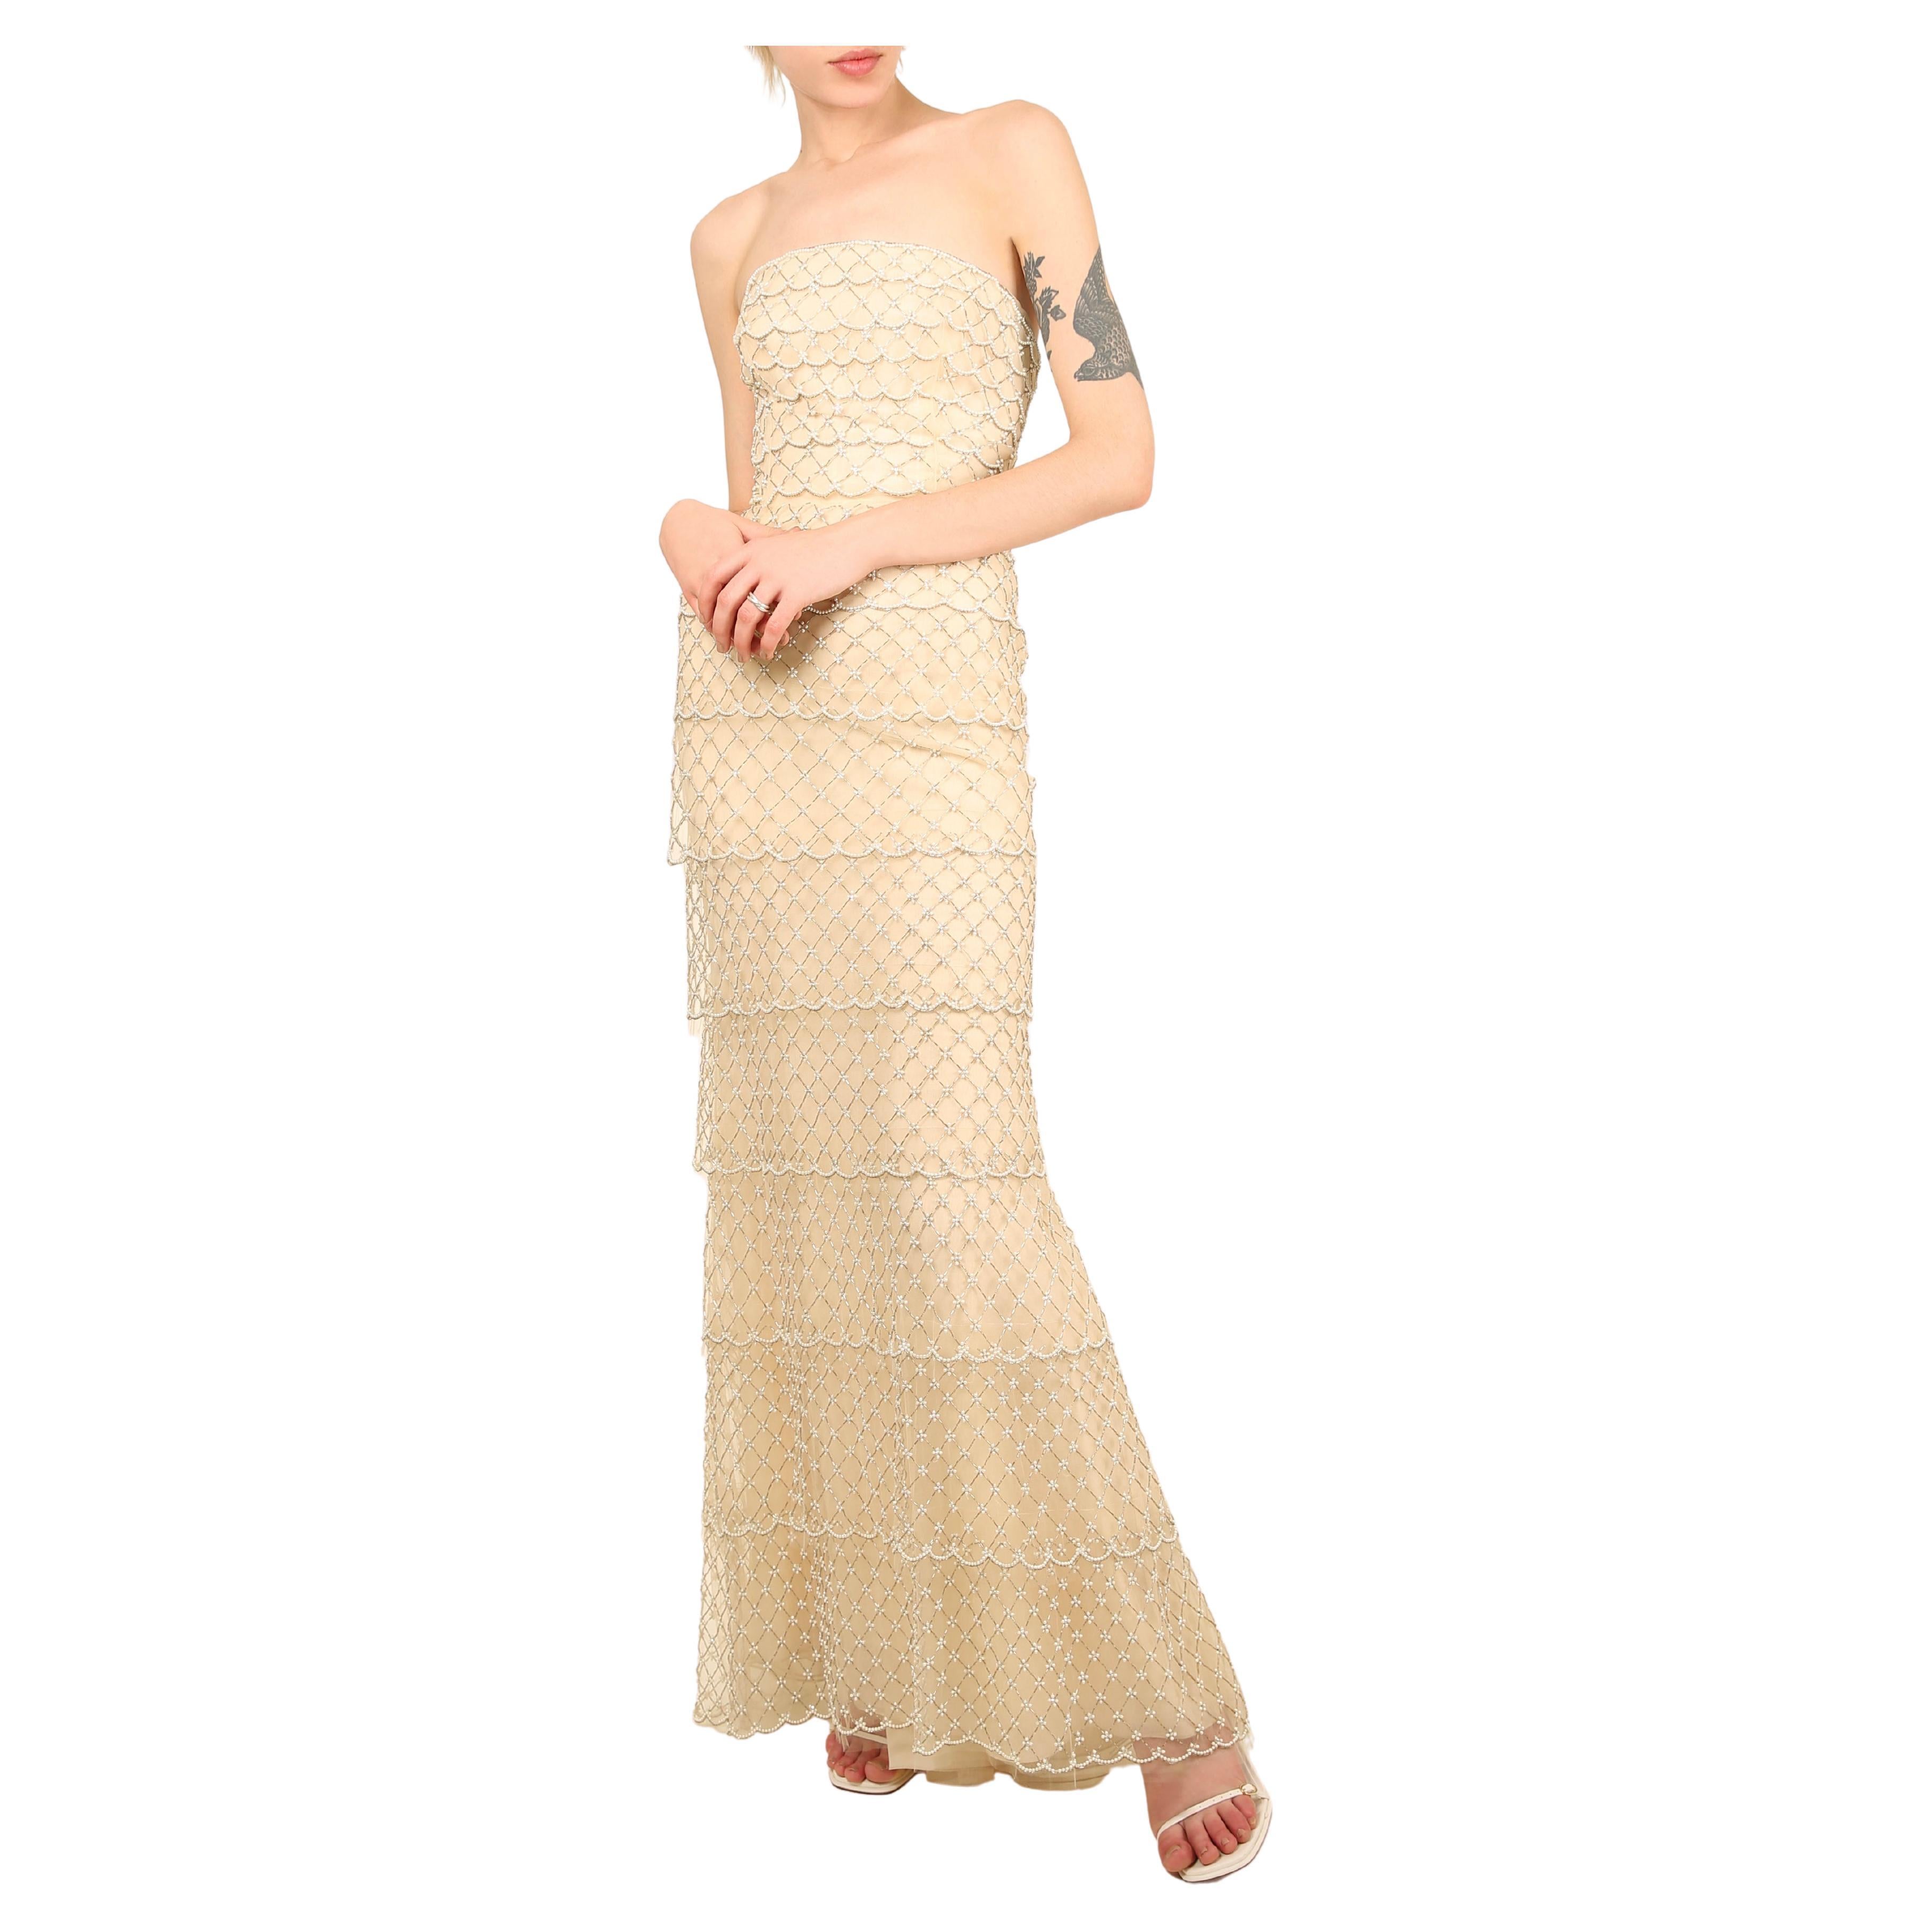 Oscar de la Renta S/S 2014 strapless tiered sheer mesh pearl wedding dress gown For Sale